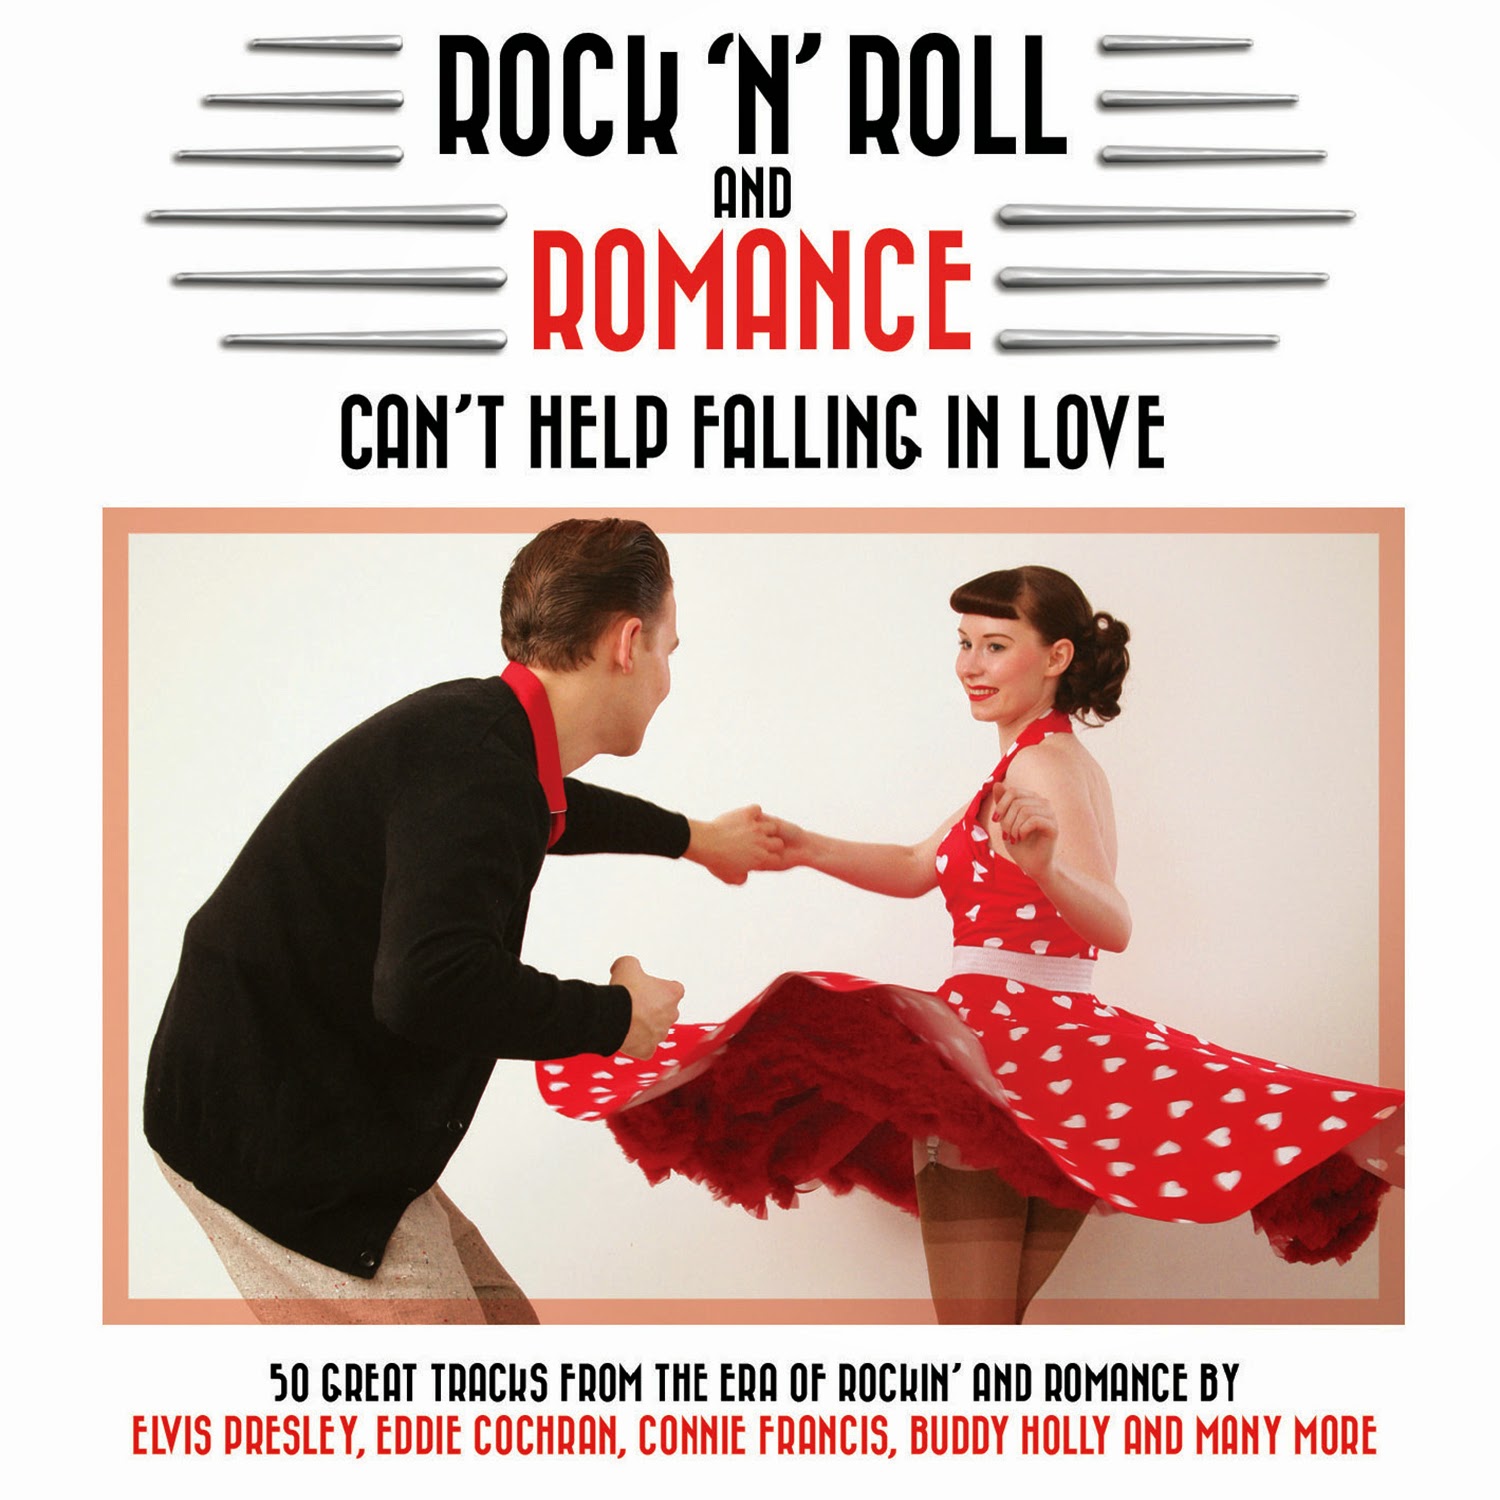 Delta Digital Media: Rock 'N' Roll and Romance-Can't Help Falling In Love1500 x 1500